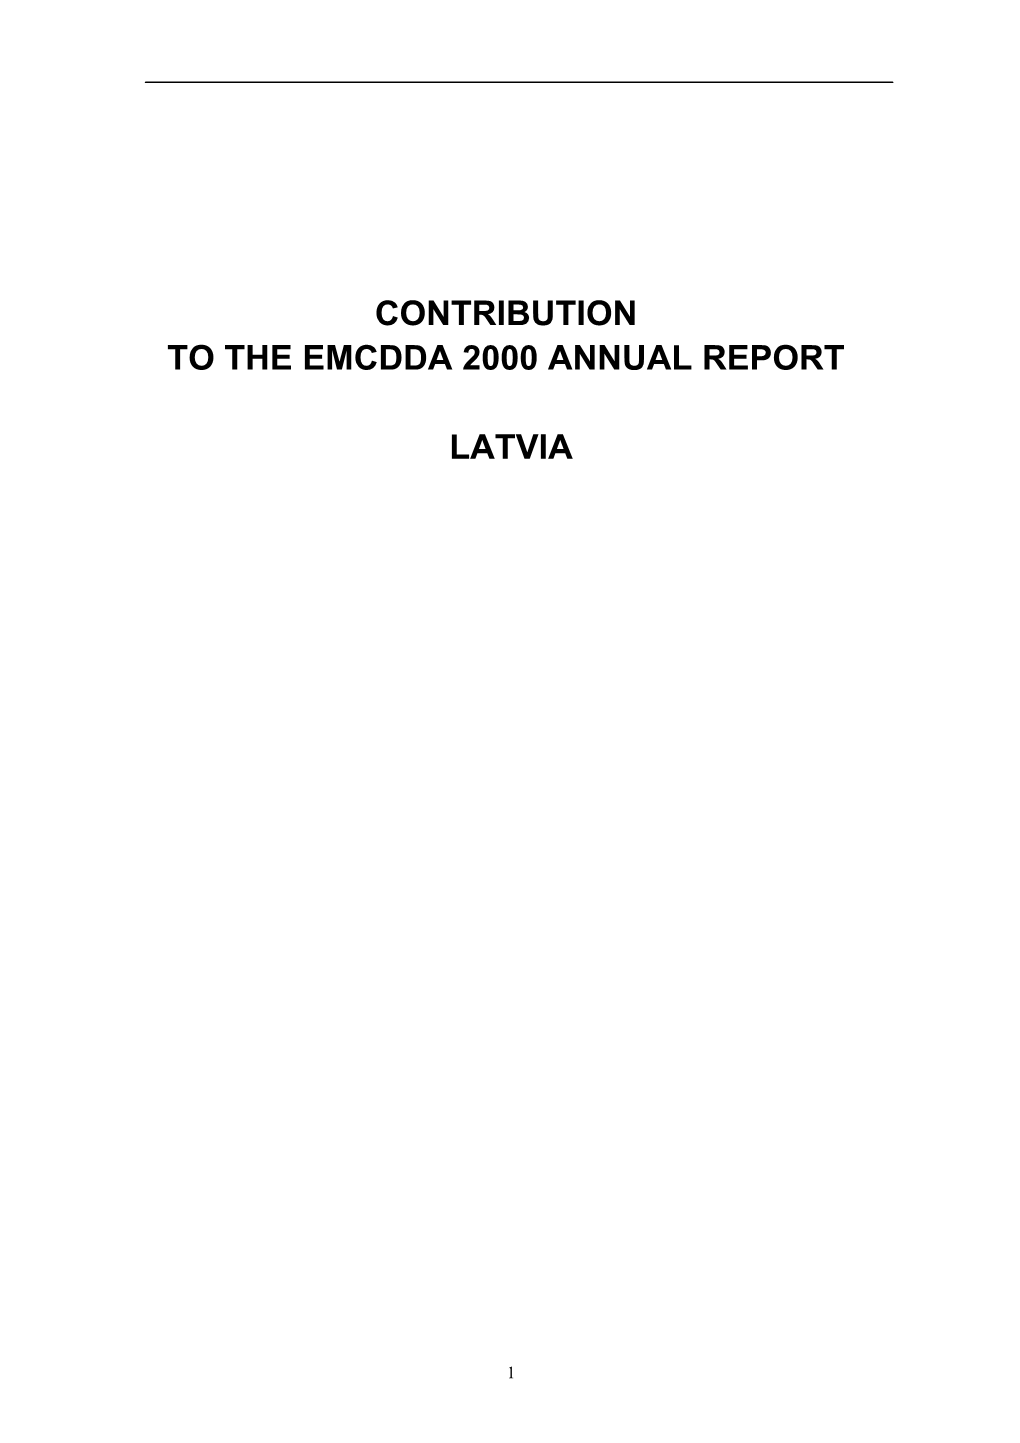 To the Emcdda 2000 Annual Report